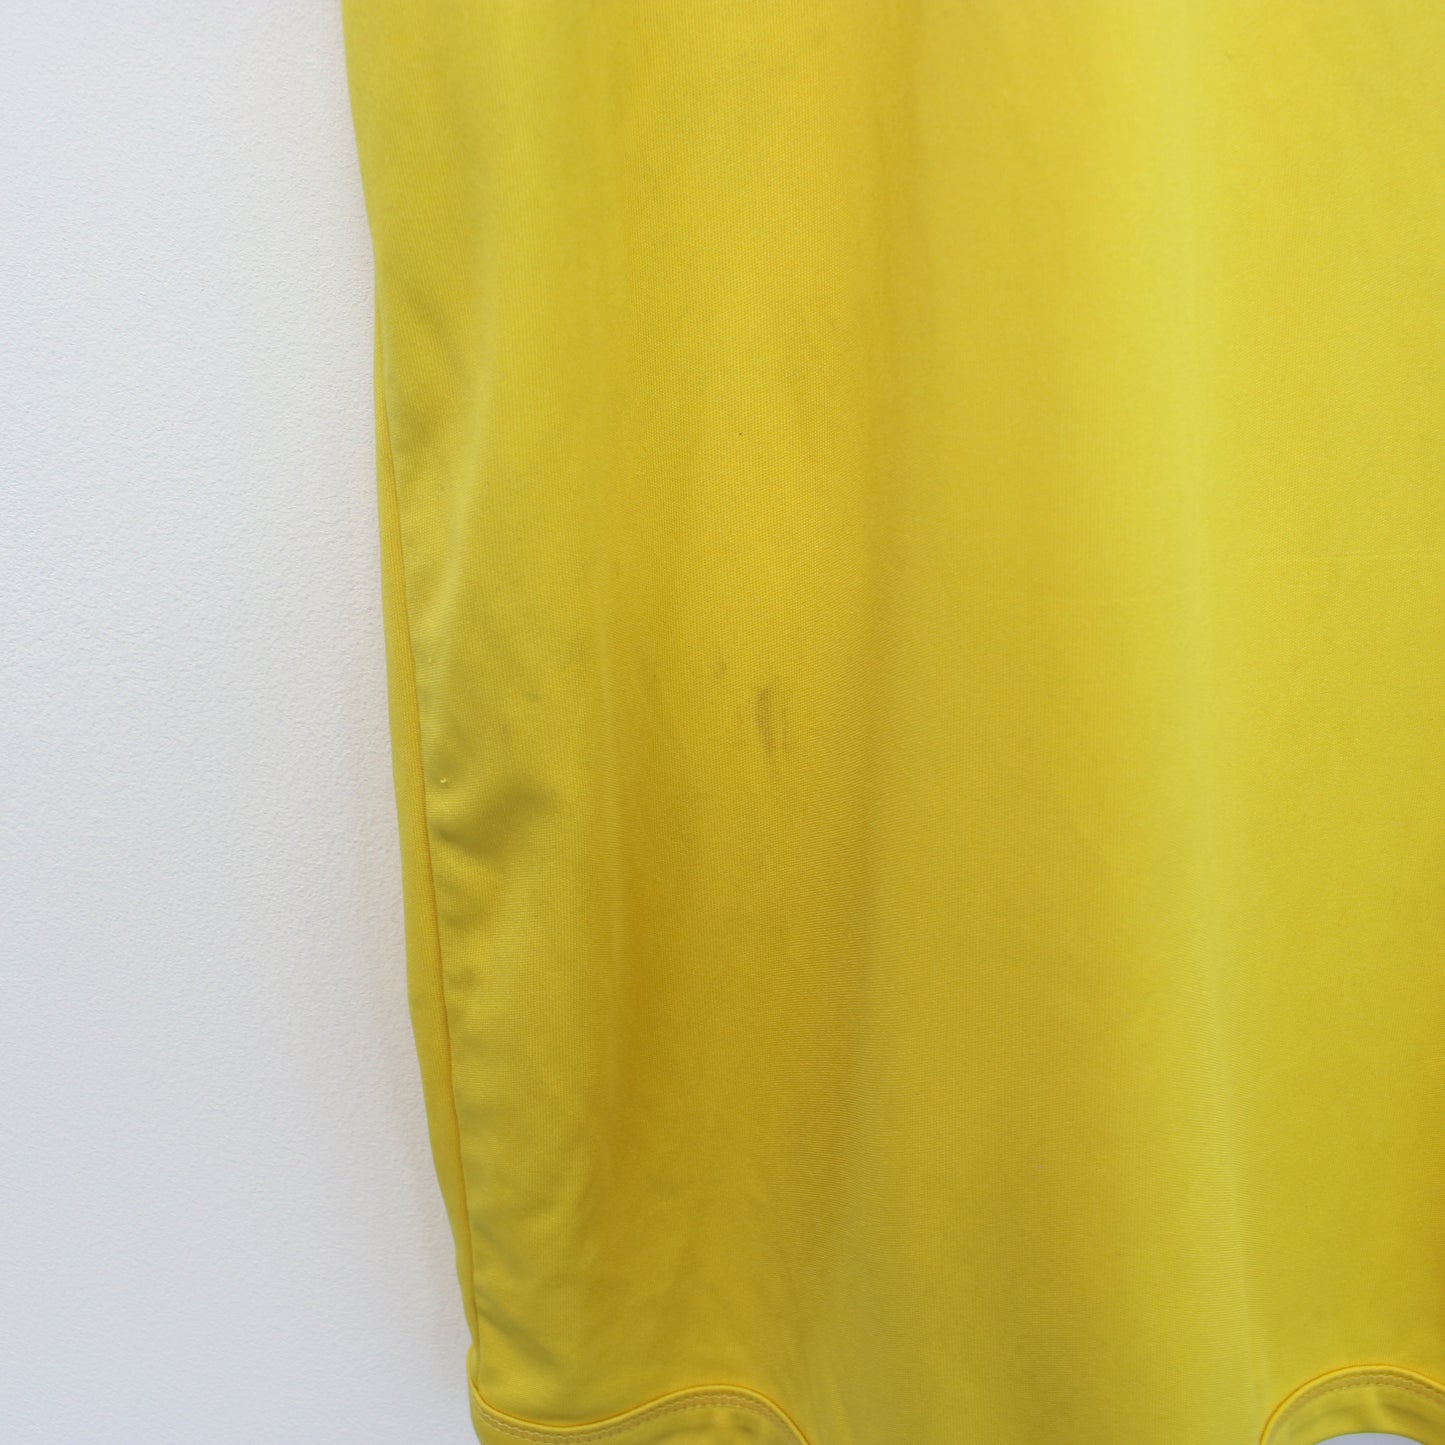 Vintage Kappa U.S. Sassuolo 2015/16 GK second kit replica football shirt in yellow. Best fits L